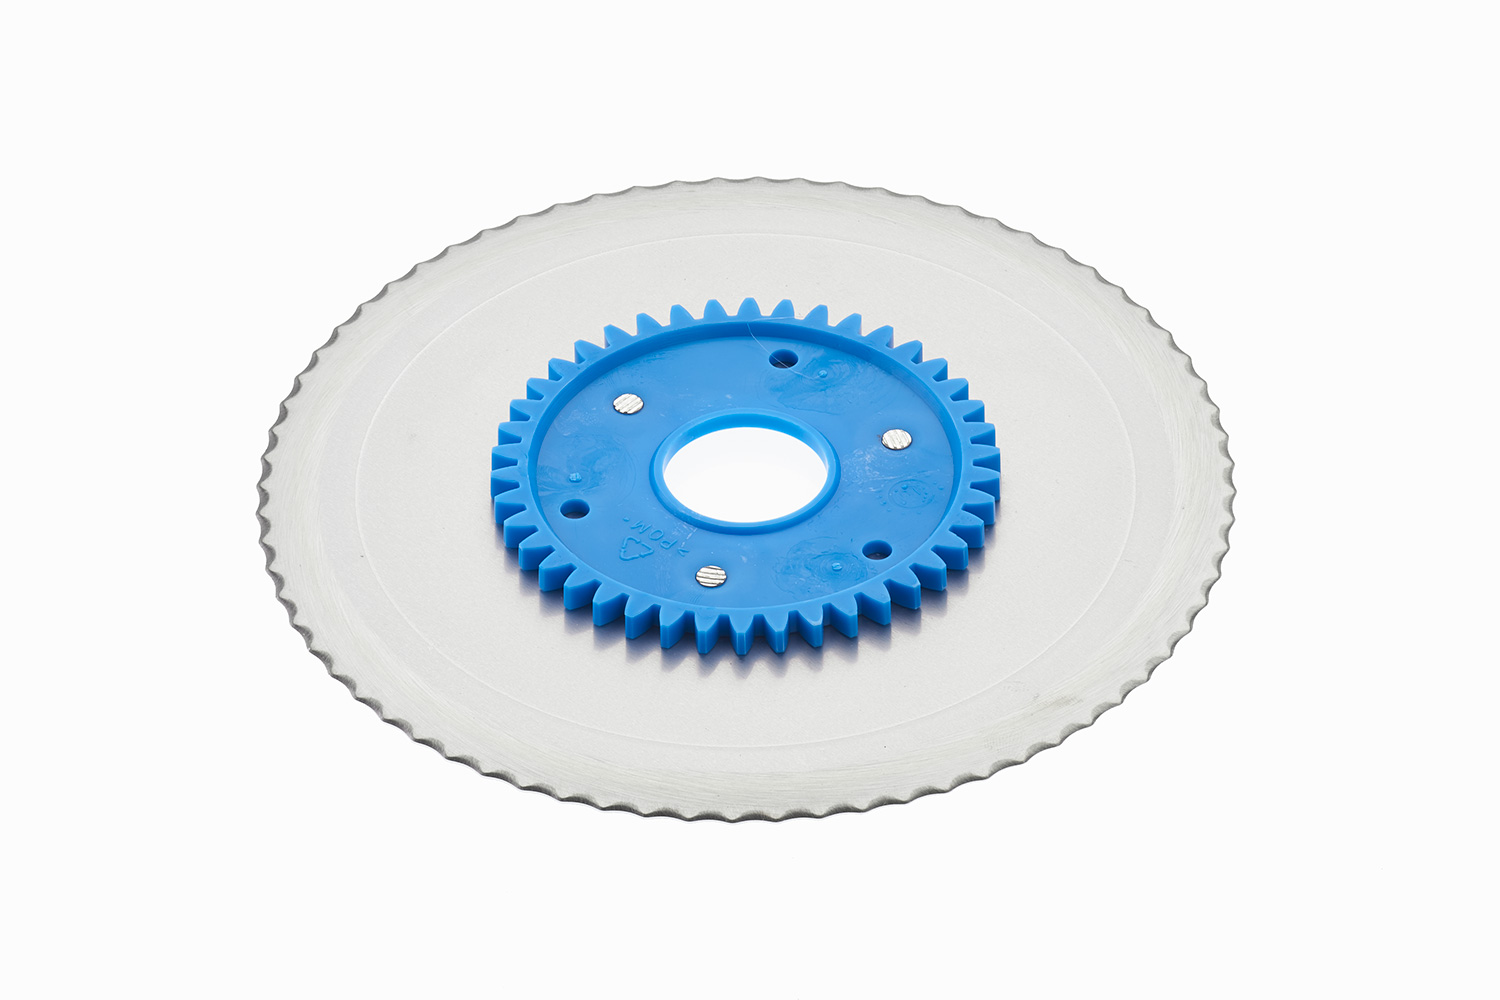 Standard serrated circular blade with a blue gear